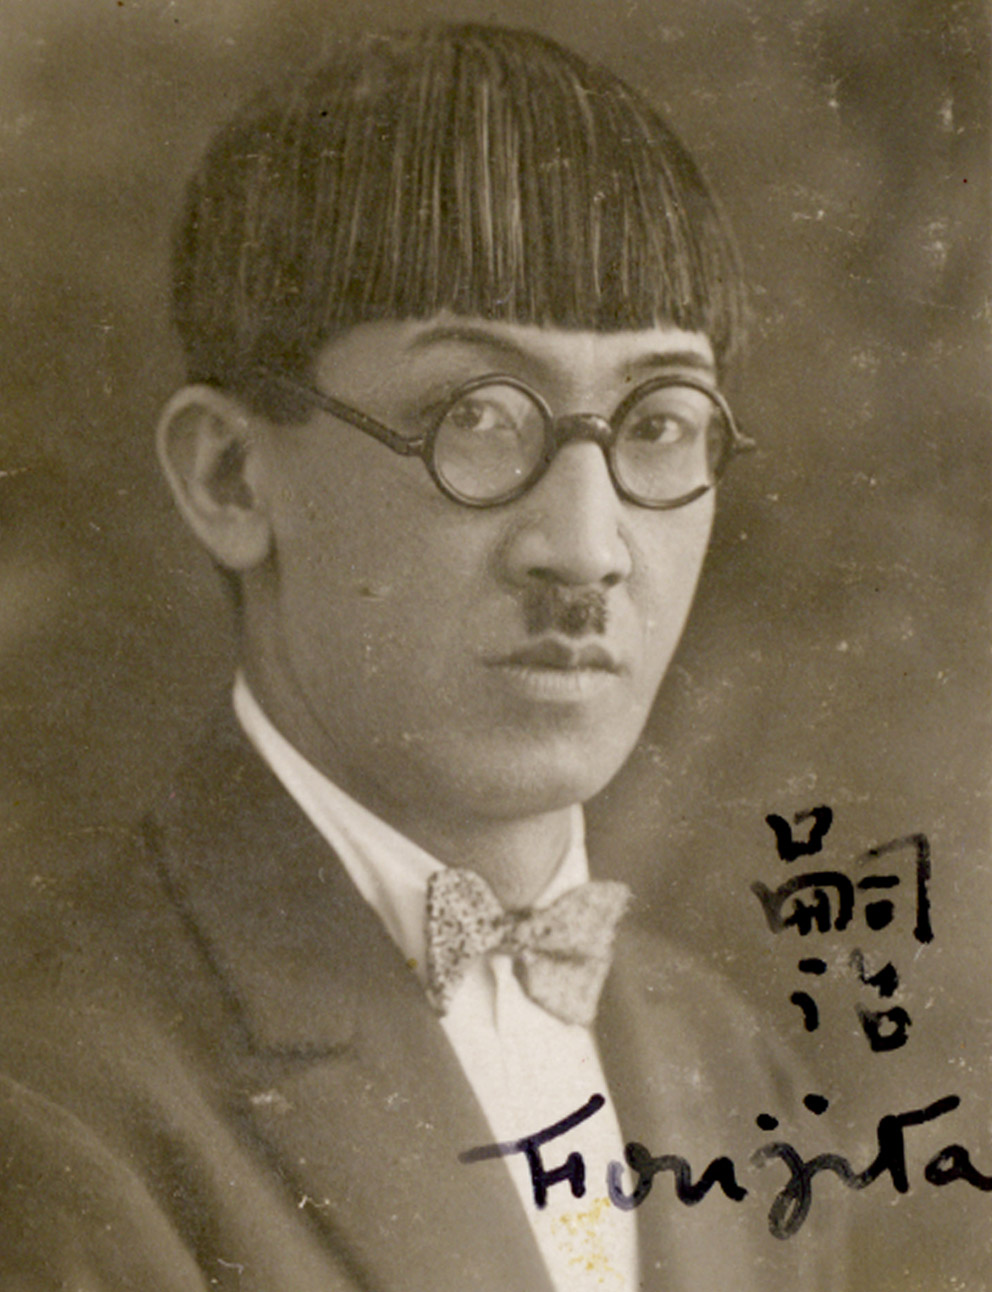 嗣治 Foujita 1922